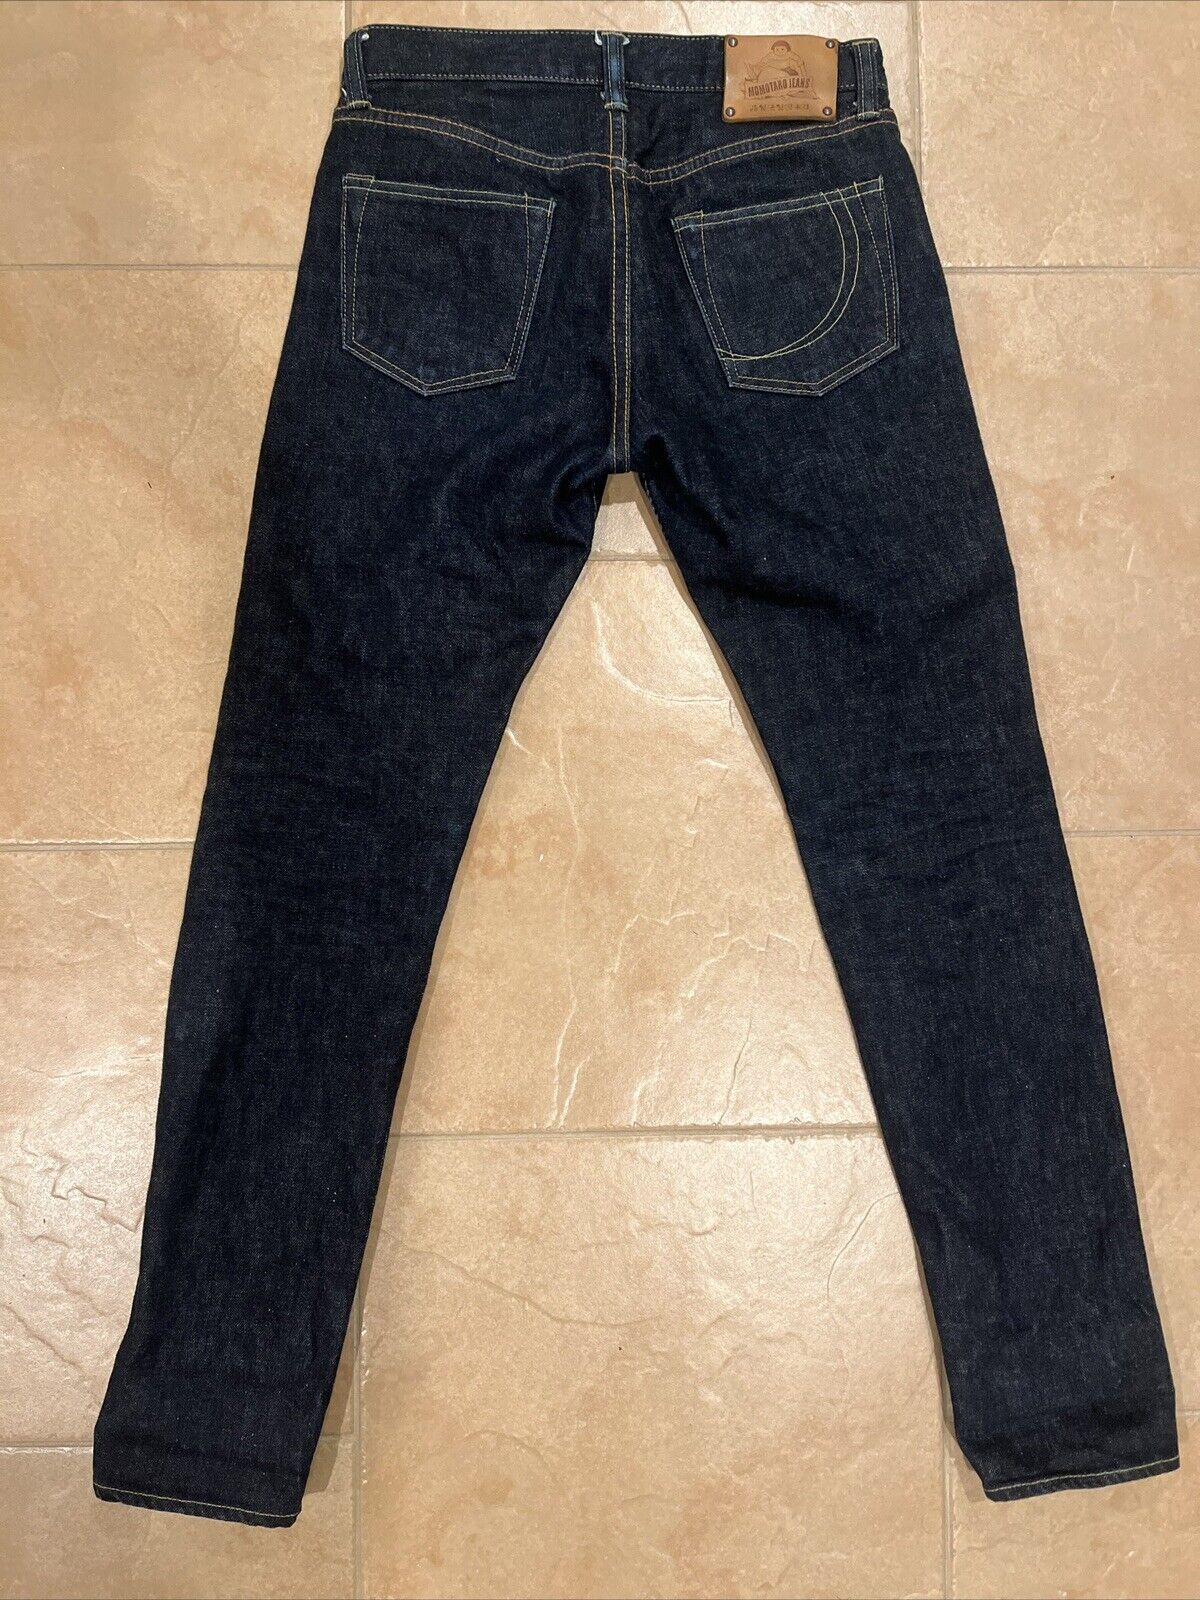 Momotaro Jeans - Size 28 (27,26) Narrow Tapered I… - image 2